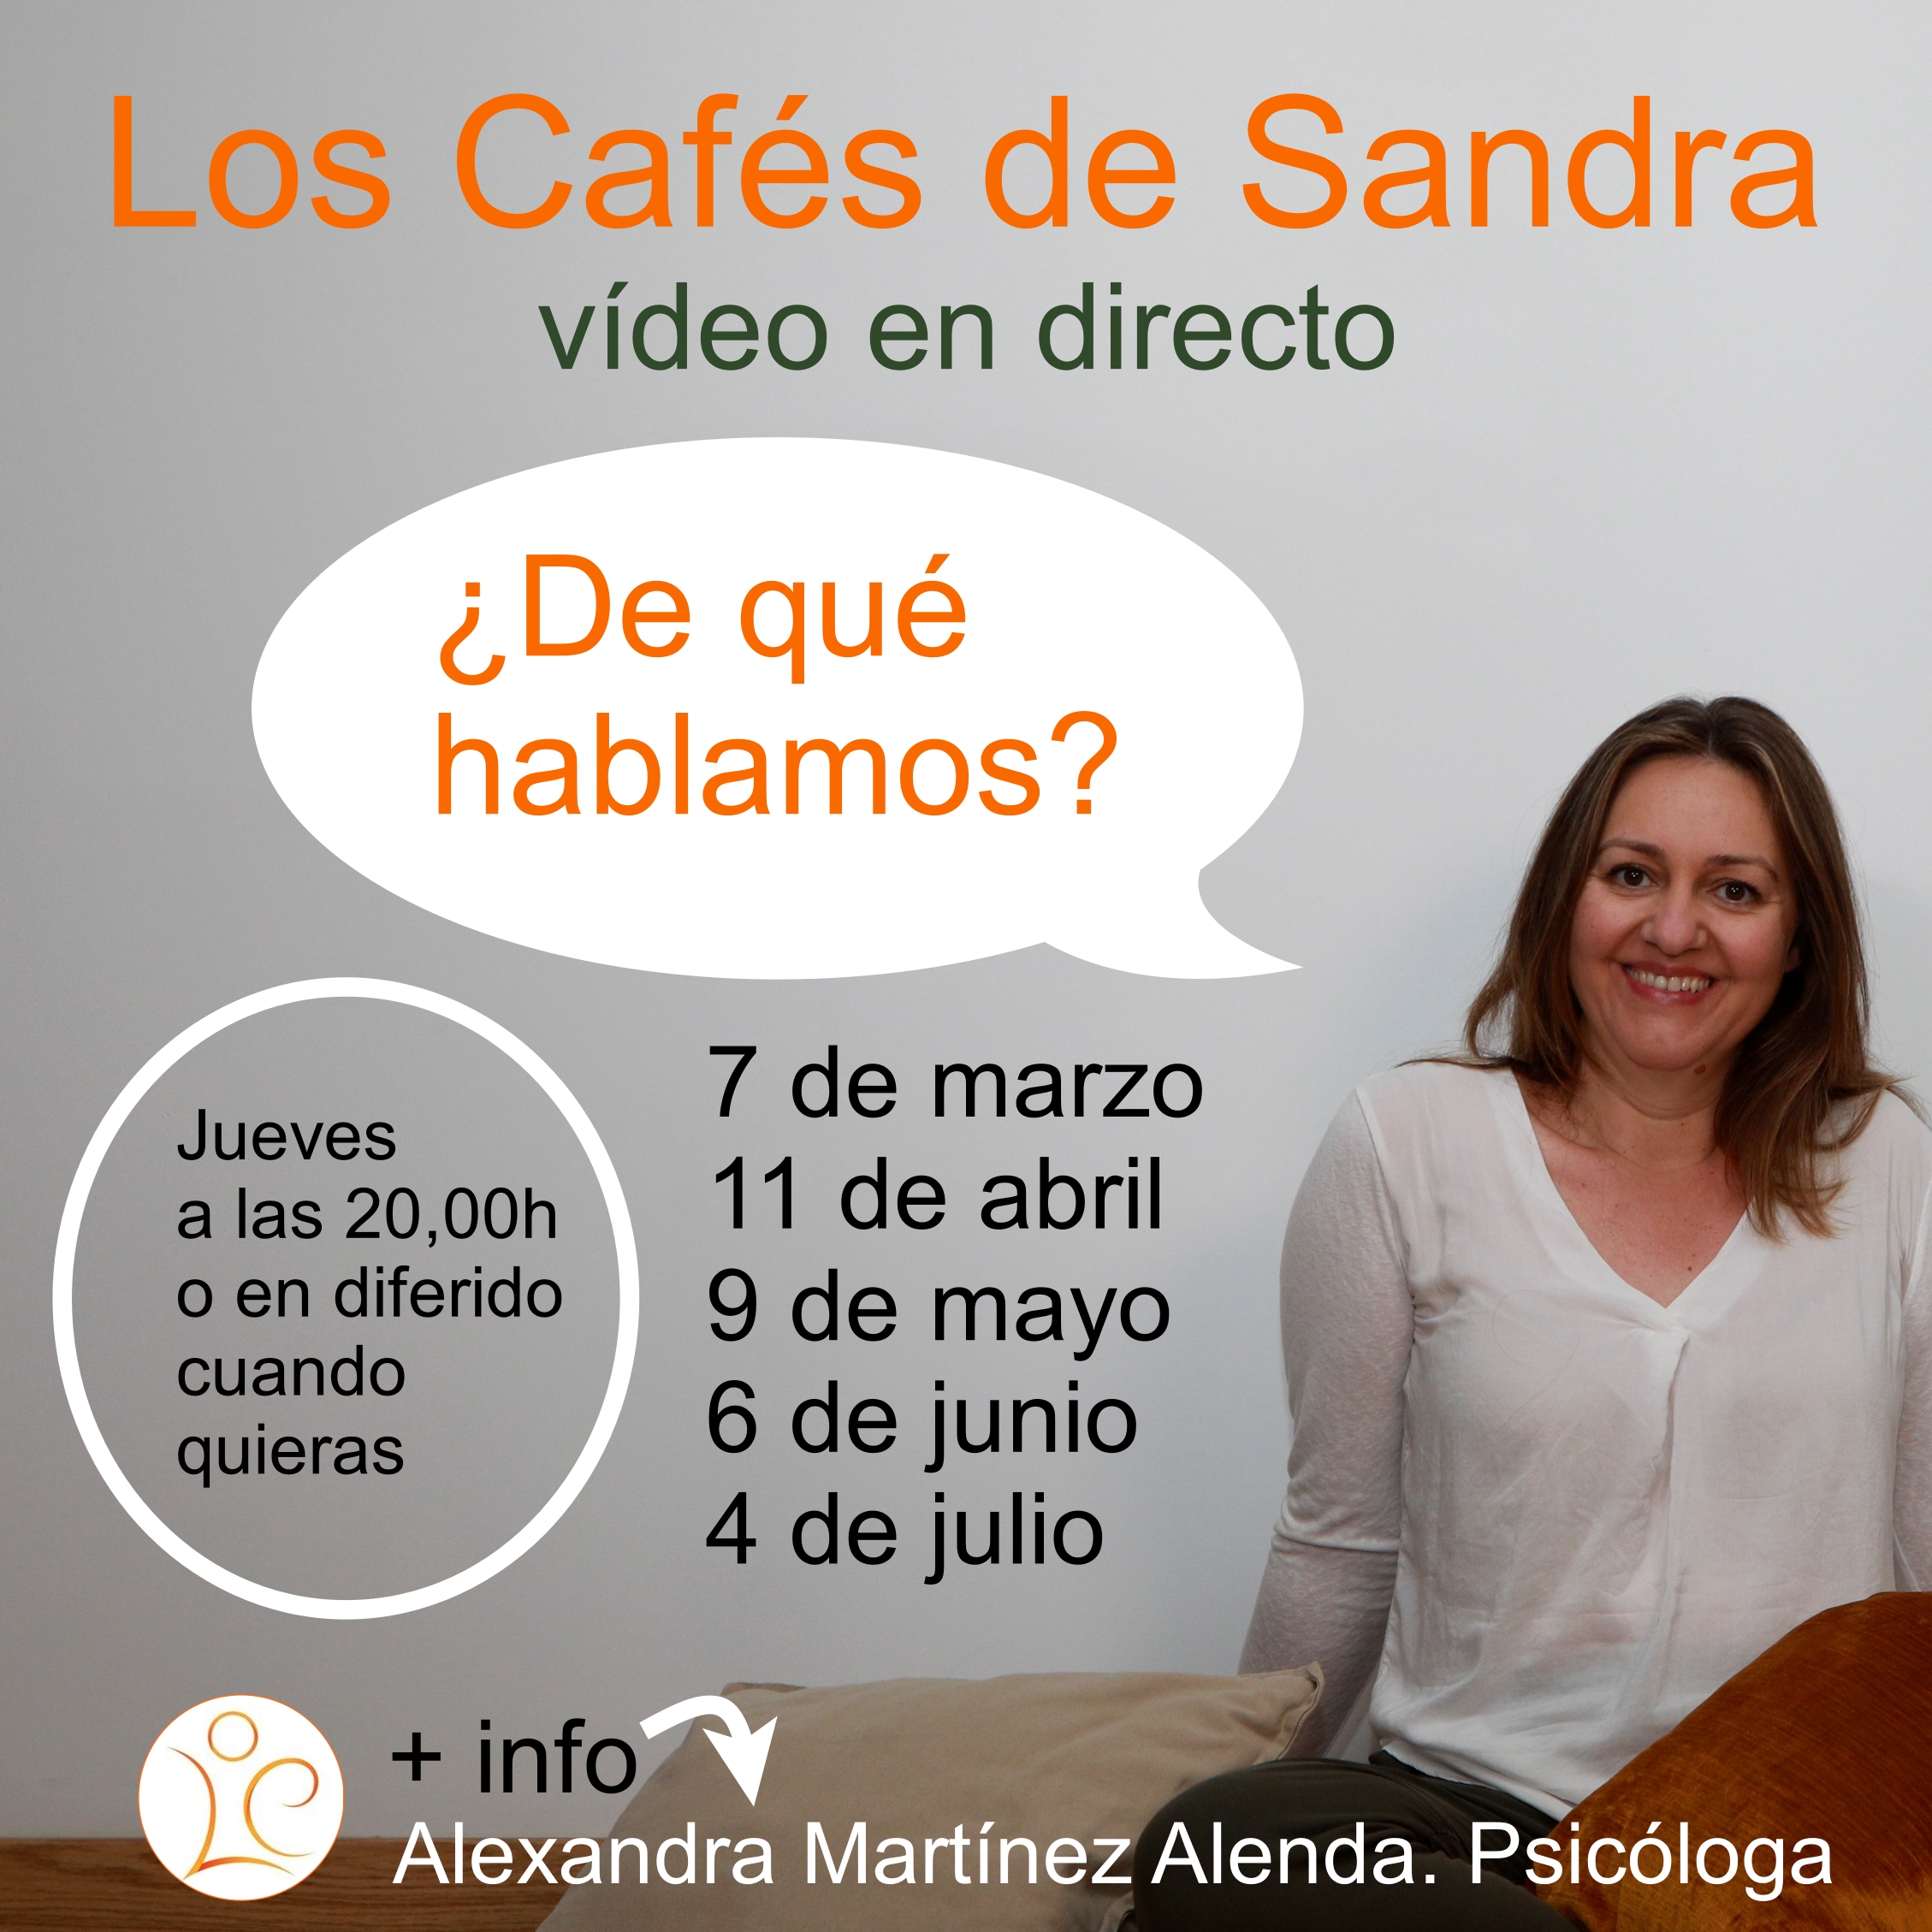 Los cafes de Sandra